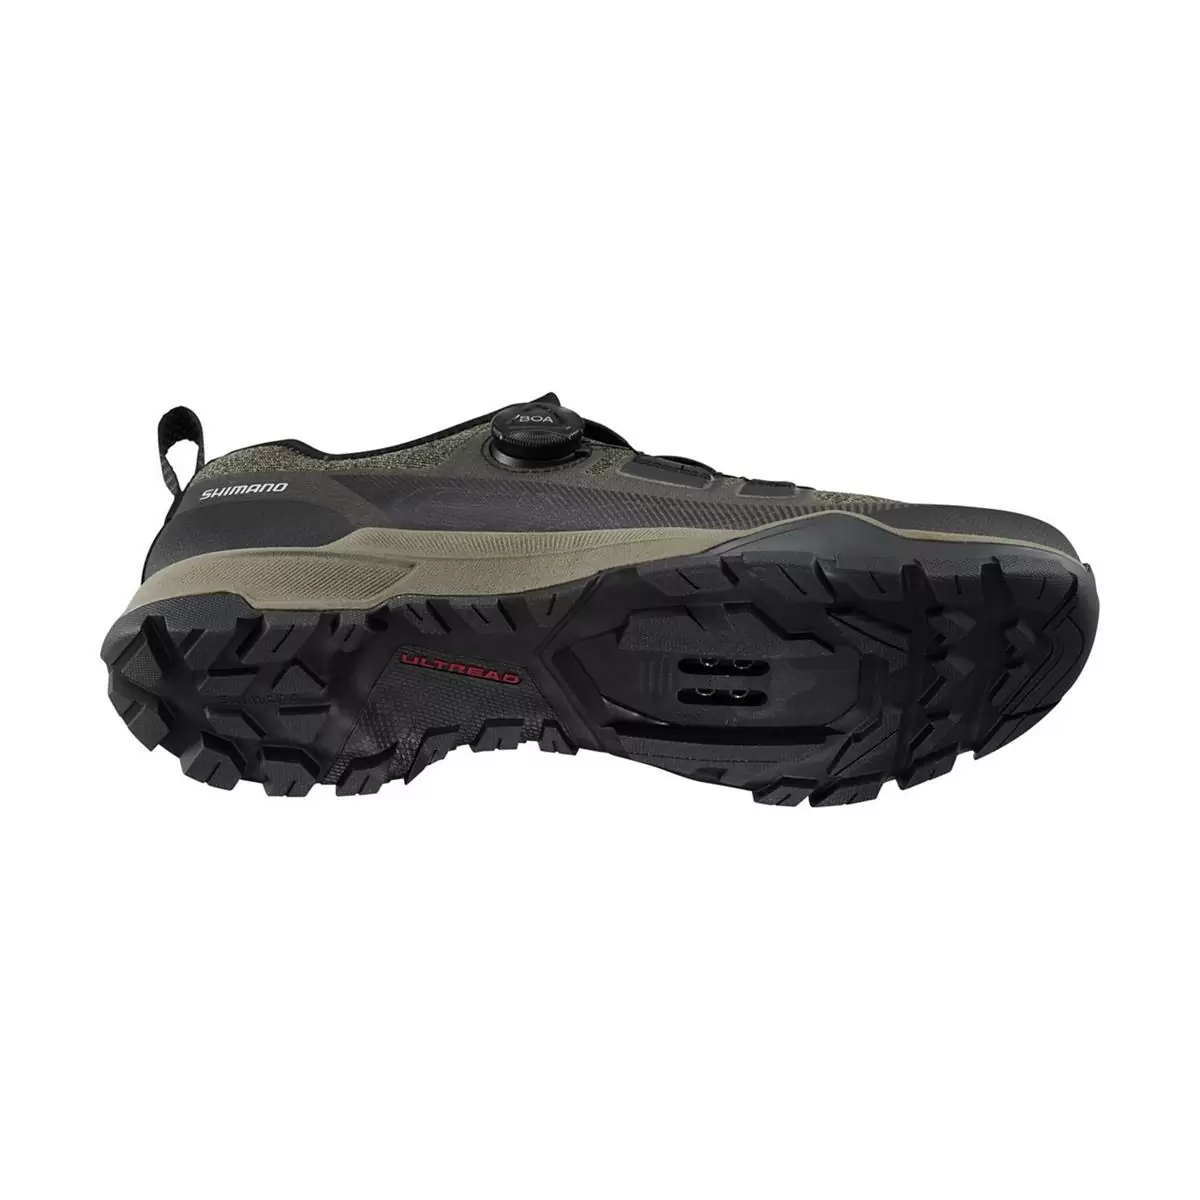 Trekking / MTB Shoes SH-EX700 Green Size 48 #2